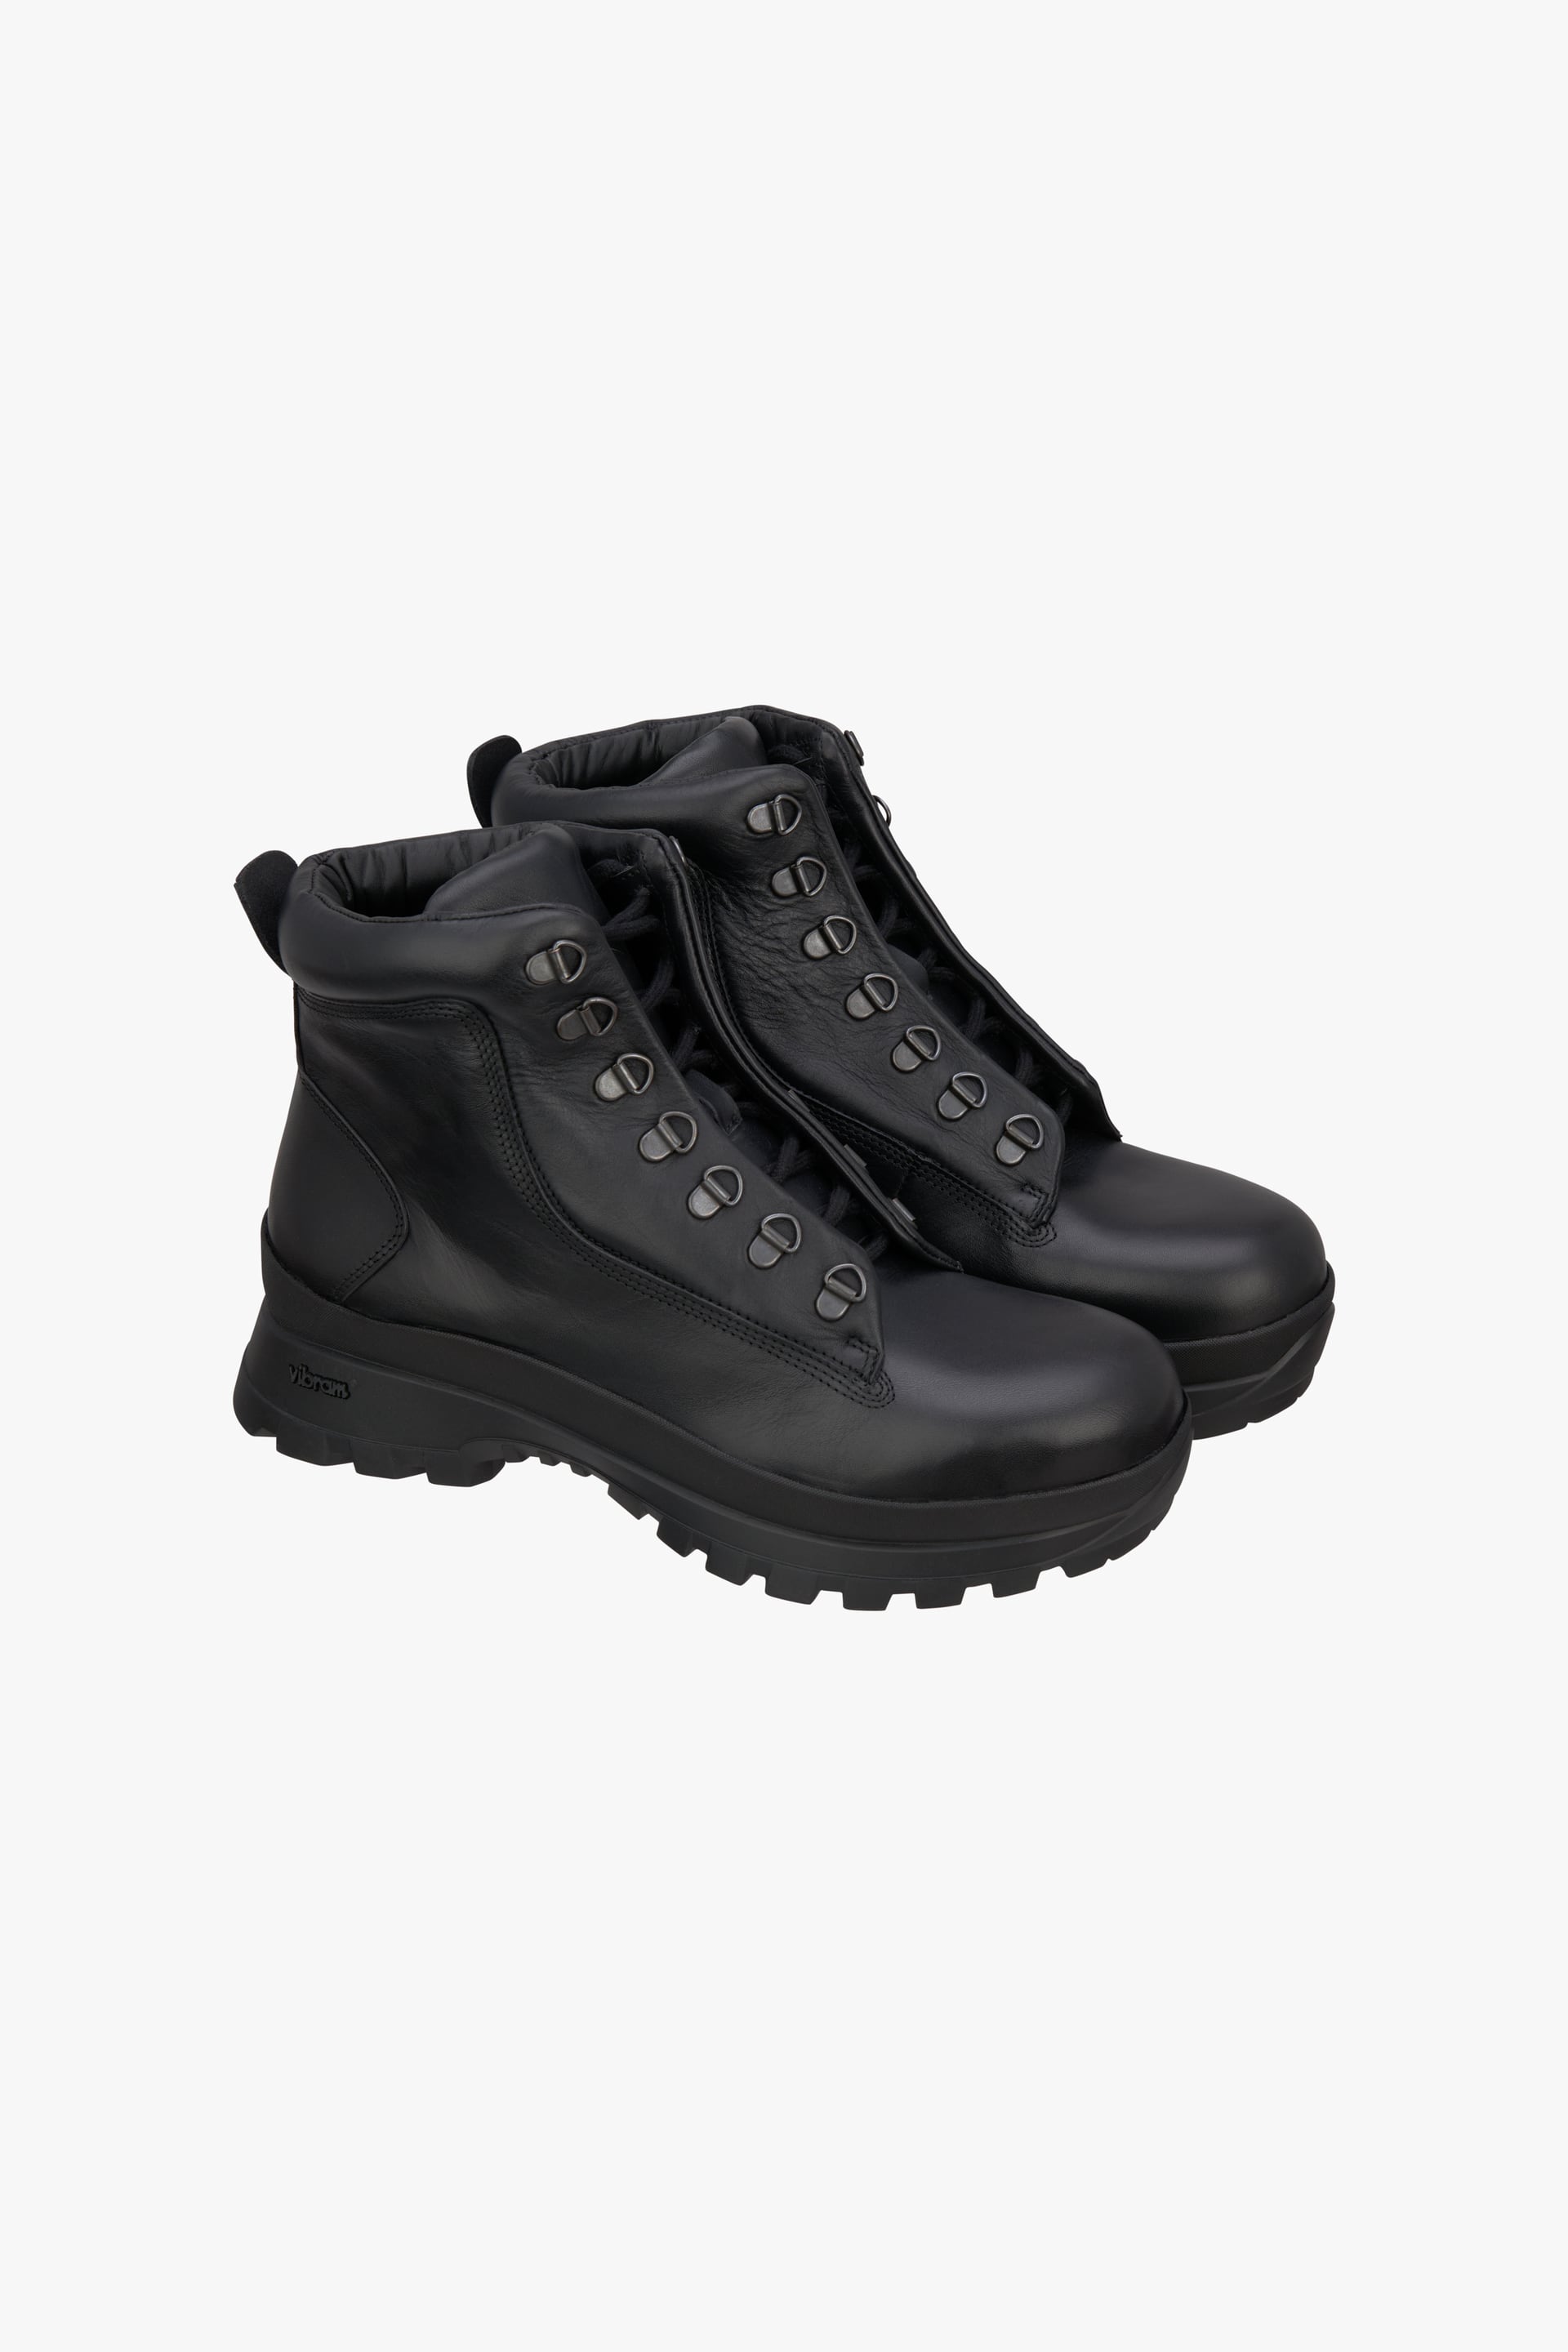 Zara - Vibram Leather Boots Limited Edition - Black - Men